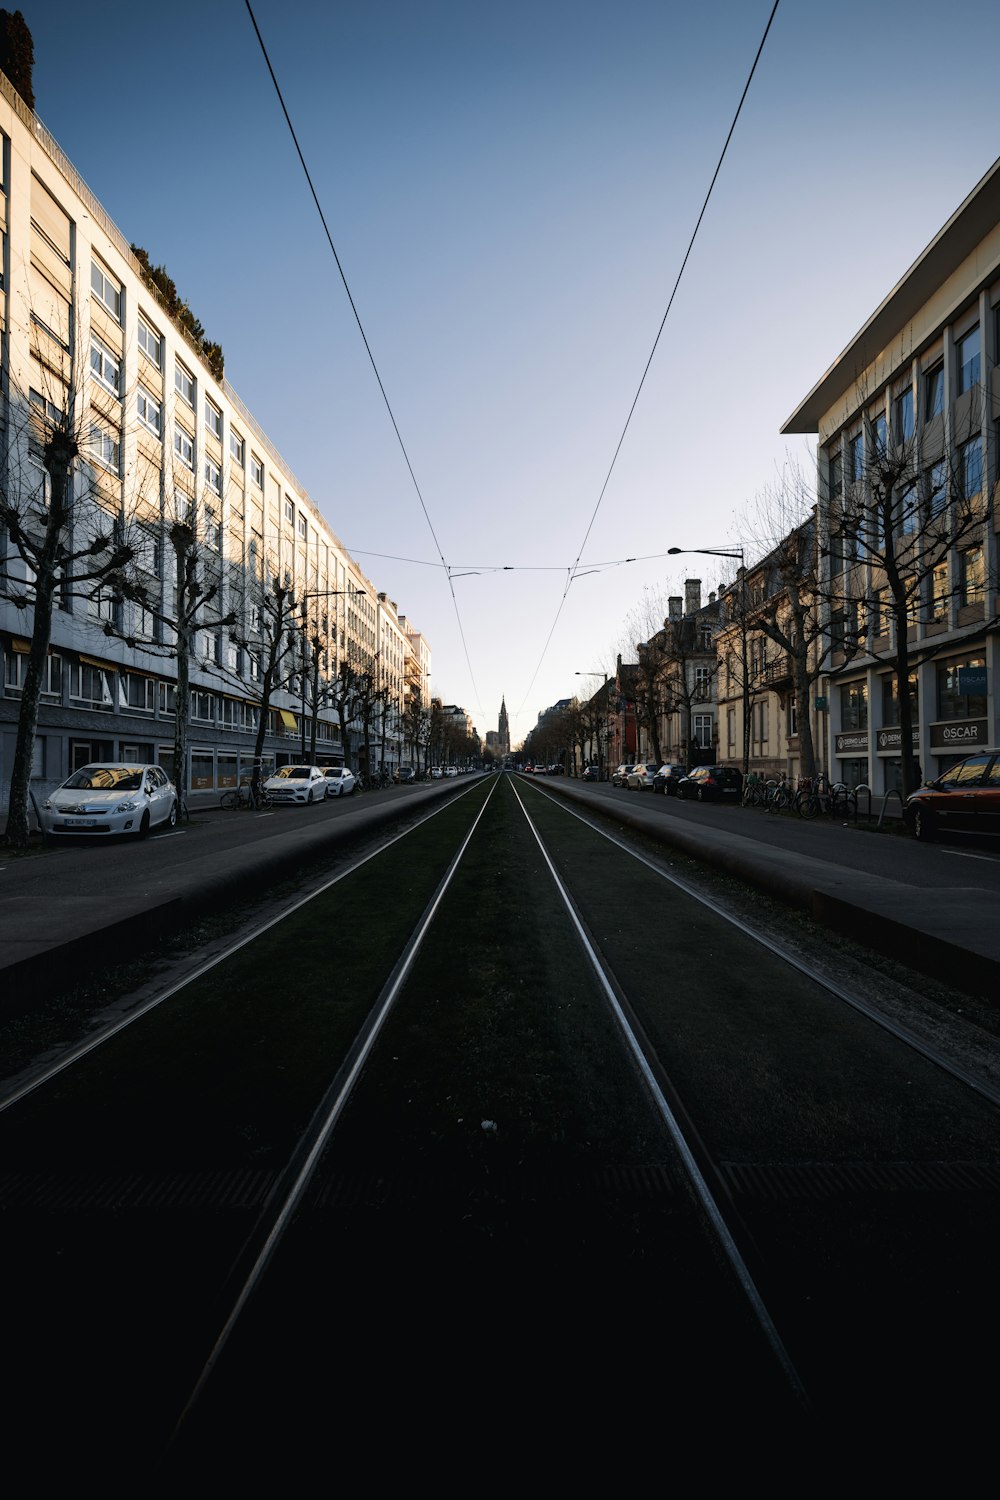 a train track running through a city street